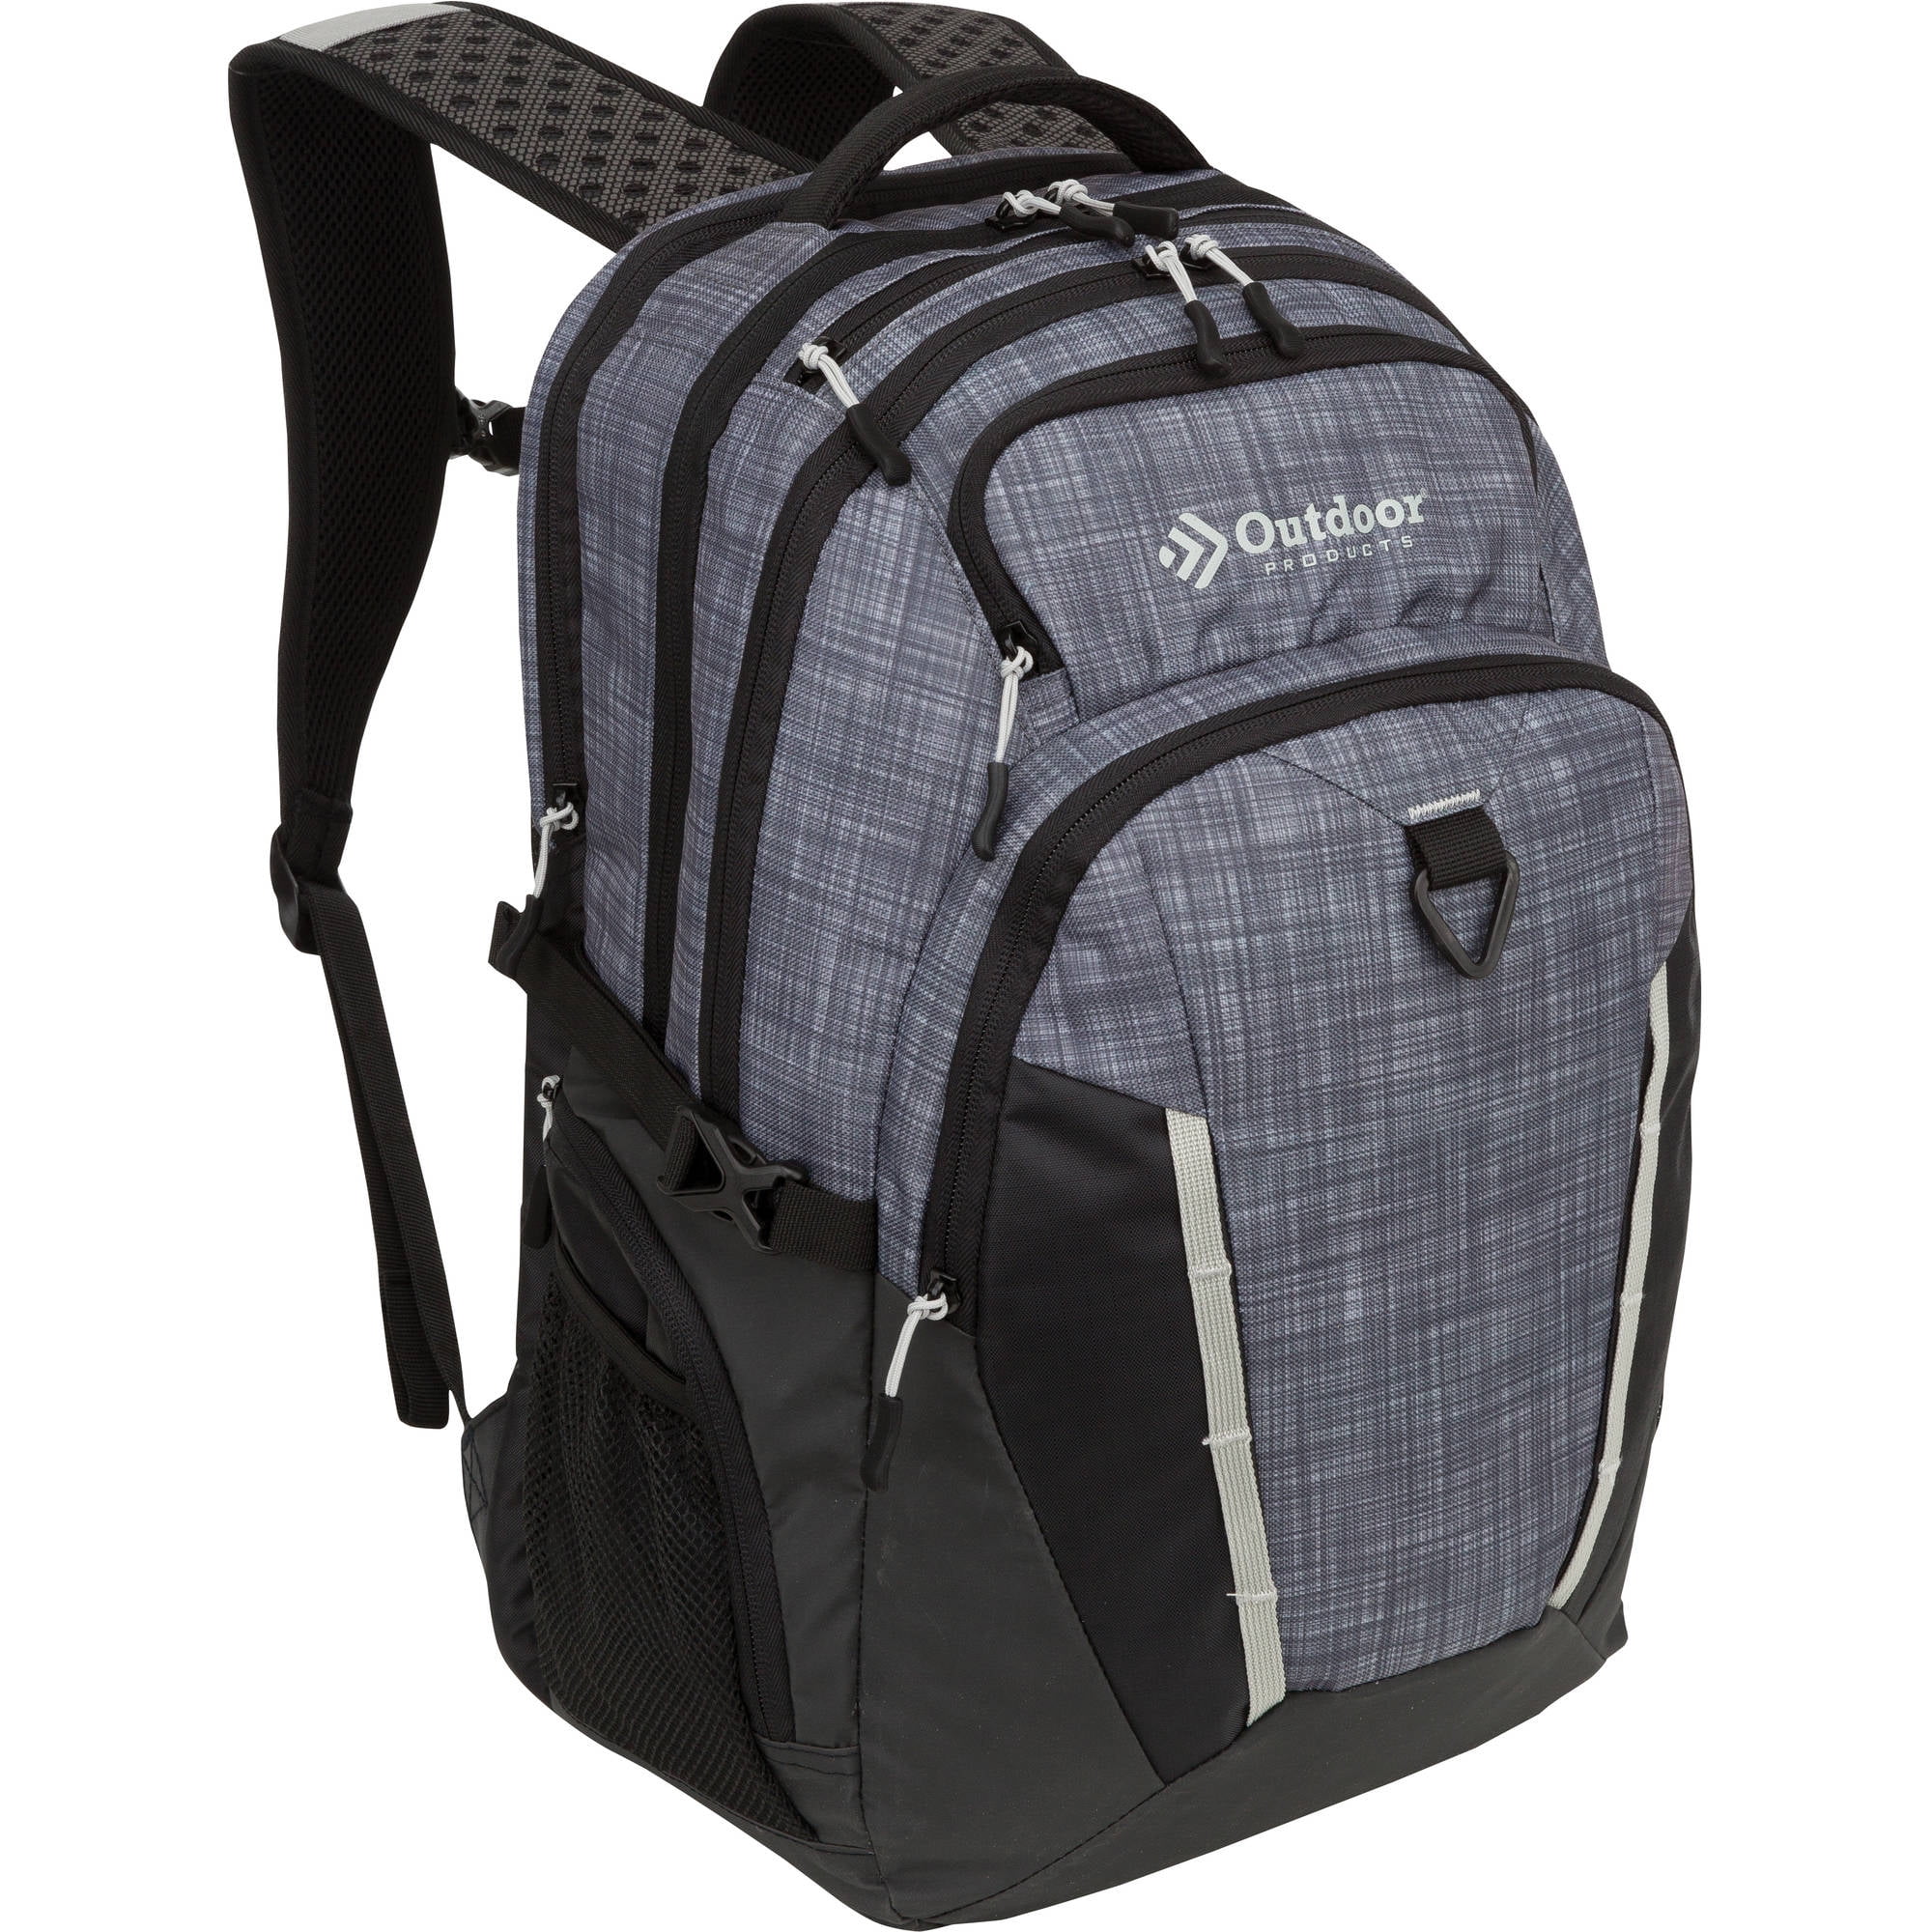 Travel 17. D 81 product рюкзак. Рюкзак maibenben bp06-b17 черный. Outdoor products. School Bag.